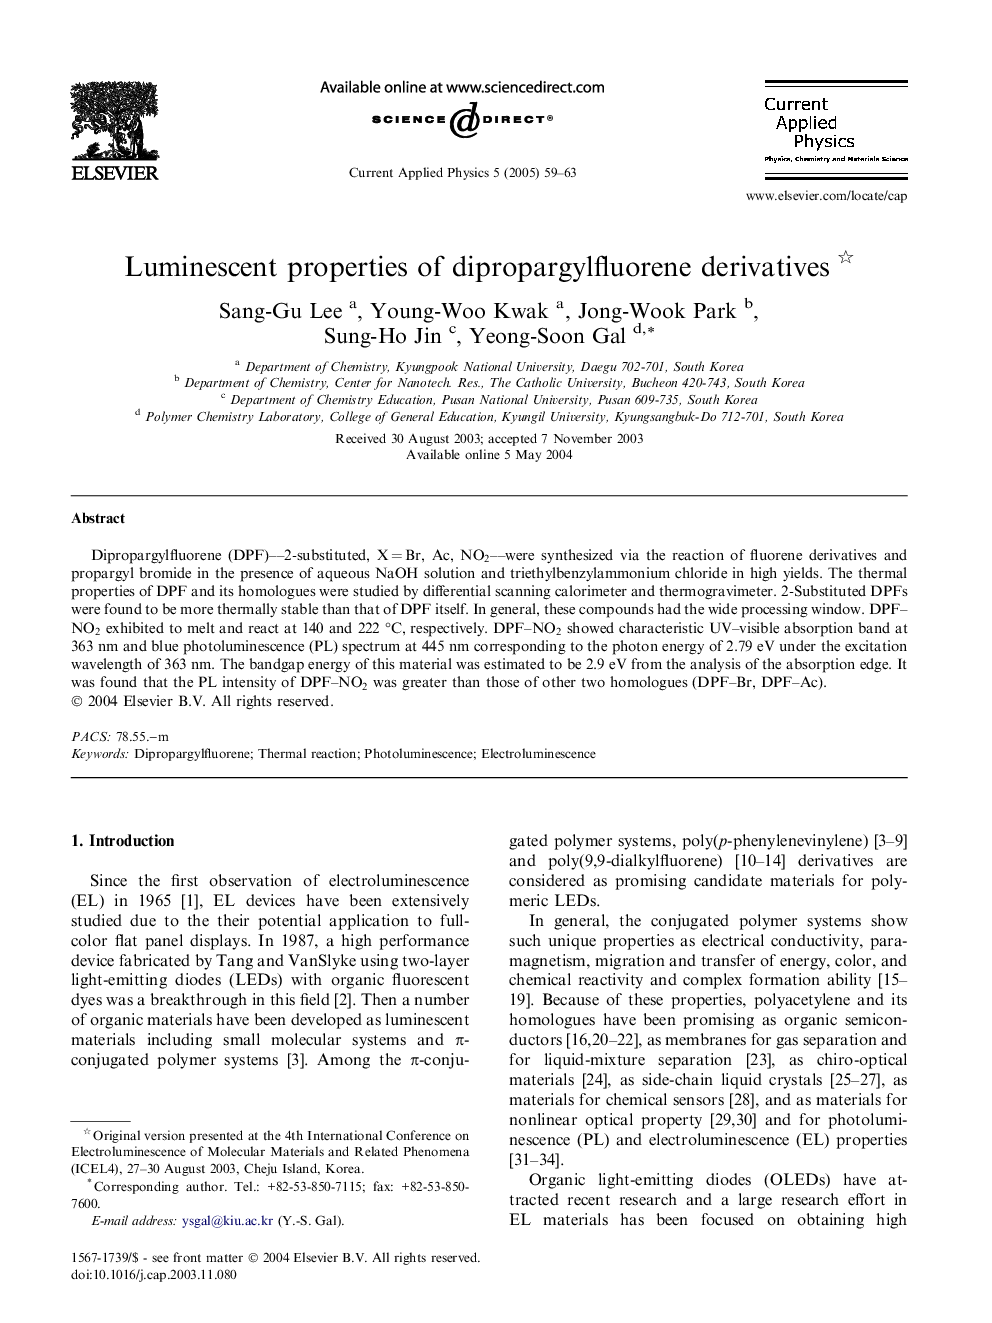 Luminescent properties of dipropargylfluorene derivatives